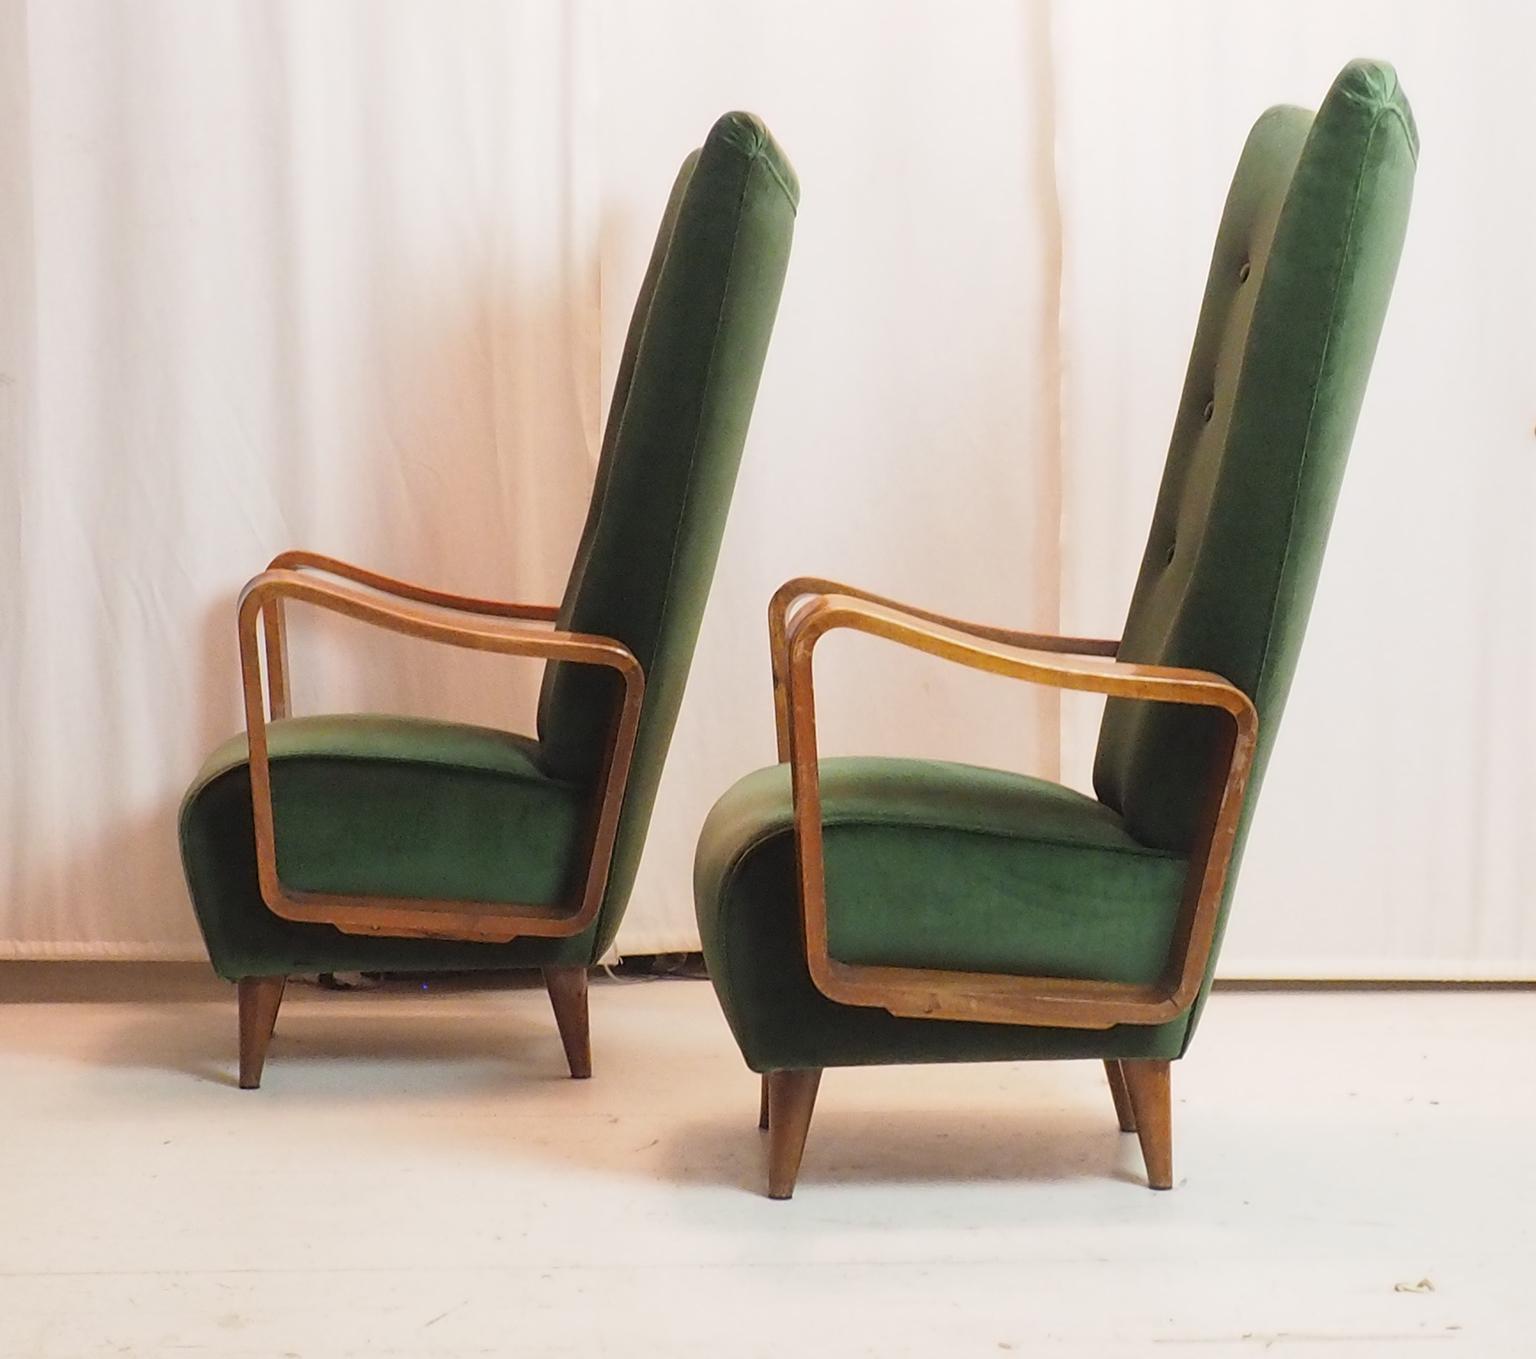 Mid-20th Century Midcentury High Back Italian Green Armchairs by Pietro Lingeri, Italy 1950s